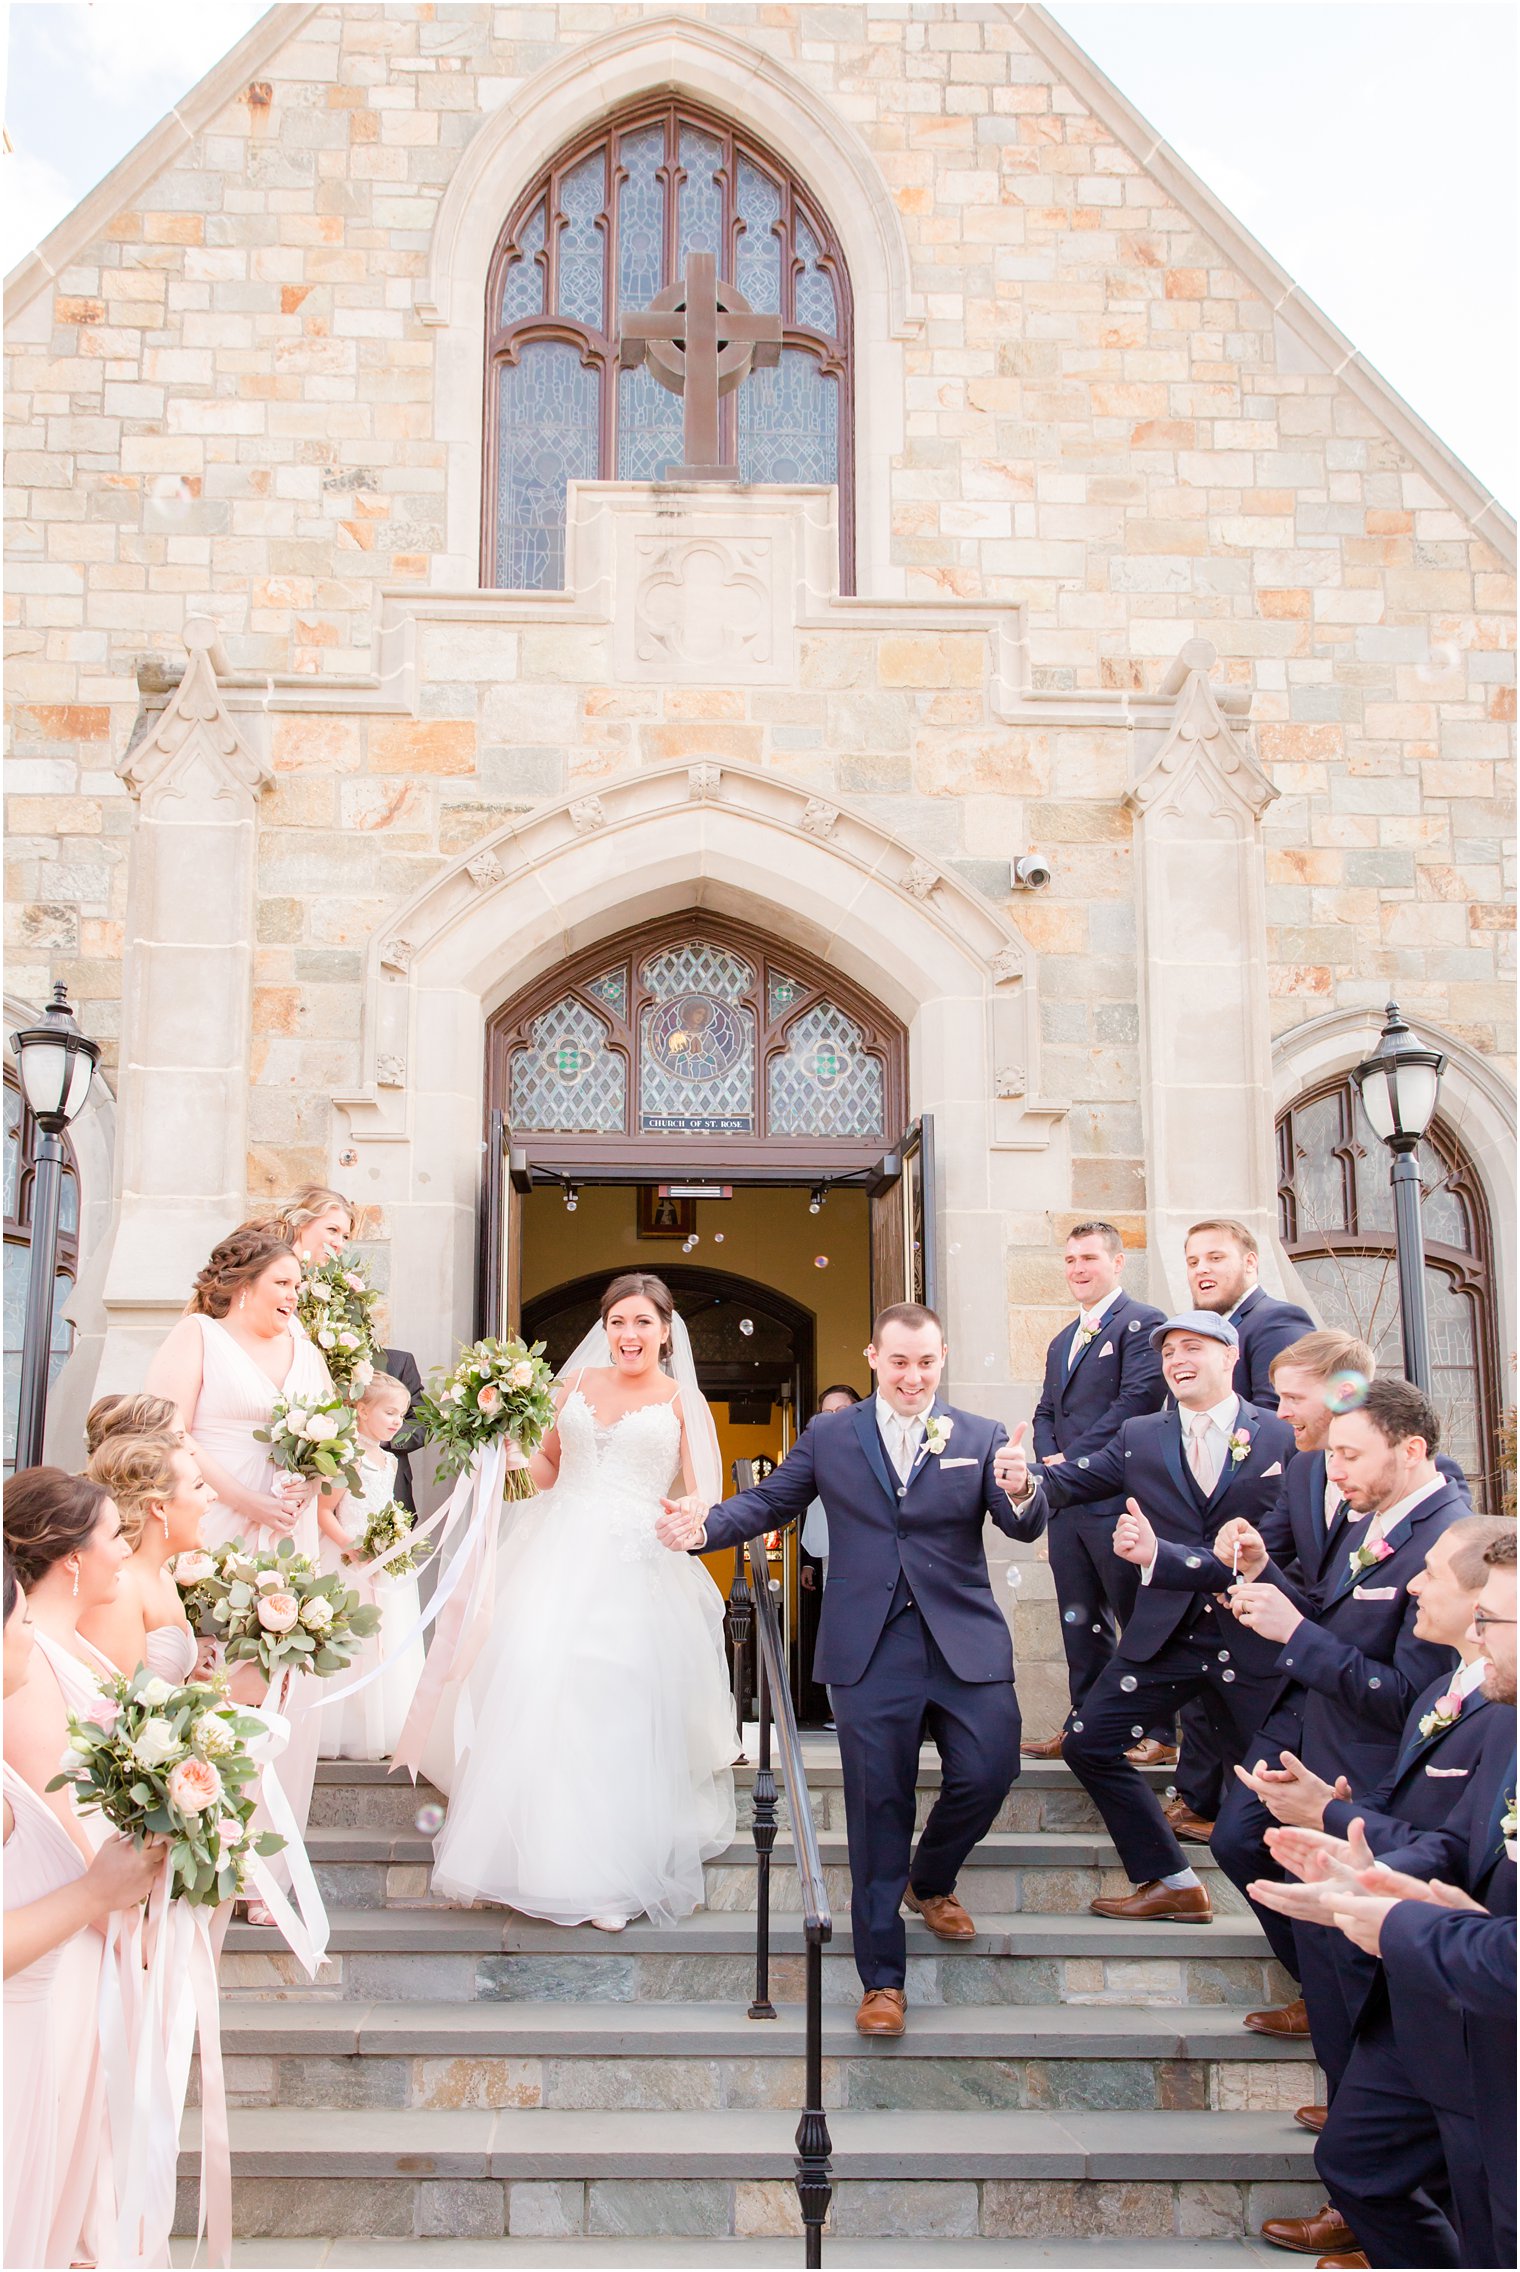 Wedding church exit at St. Rose in Belmar, NJ